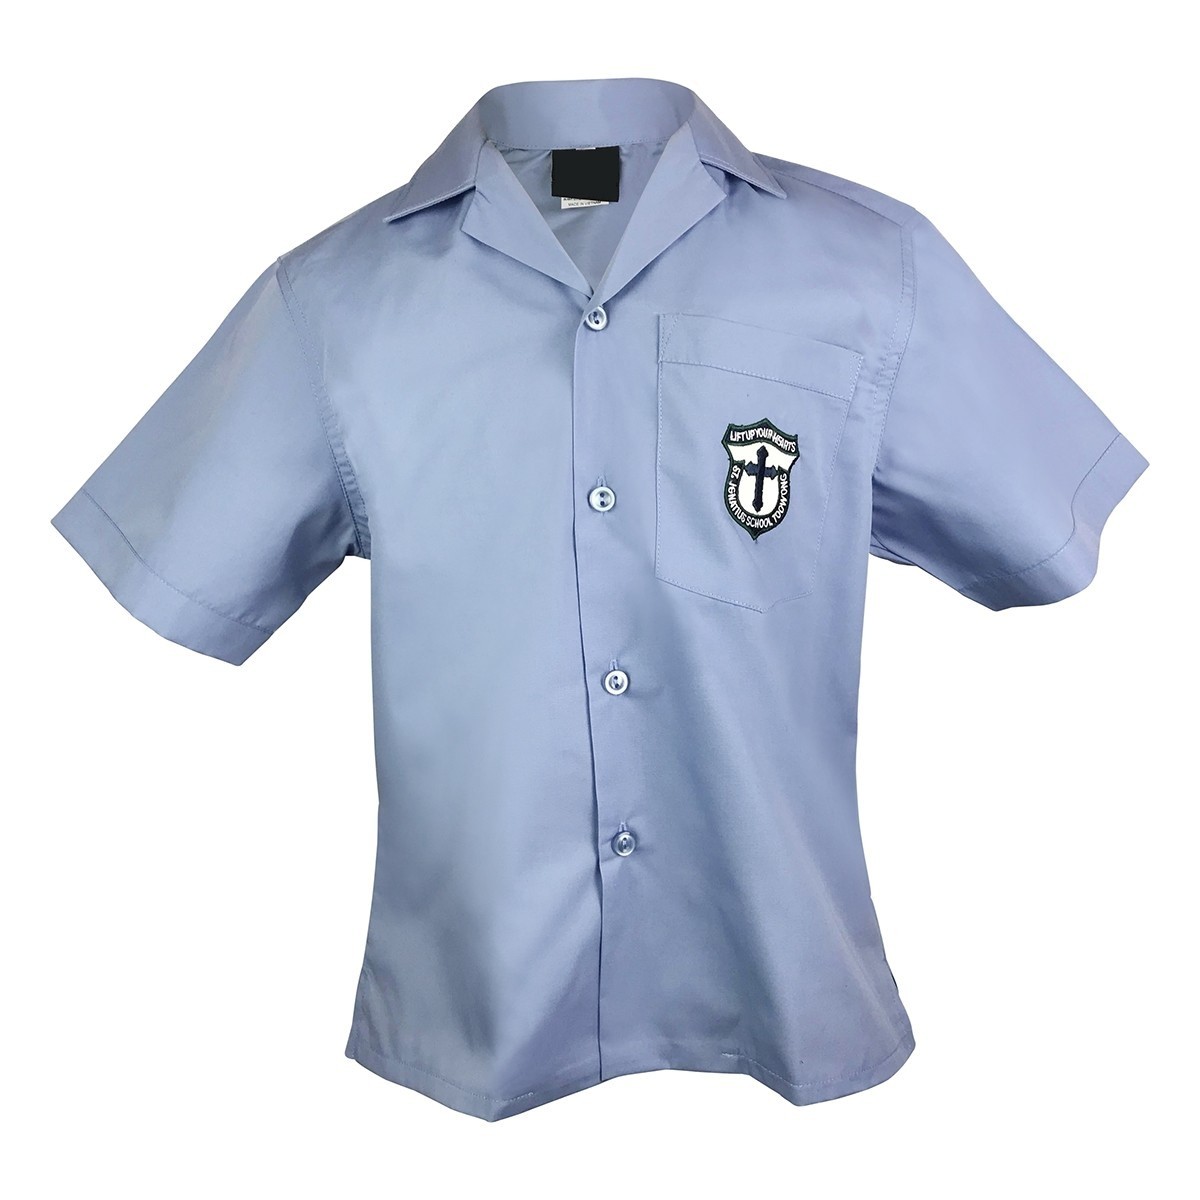 Formal Shirt - Uniforms - St Ignatius School (Toowong) - Shop By School ...